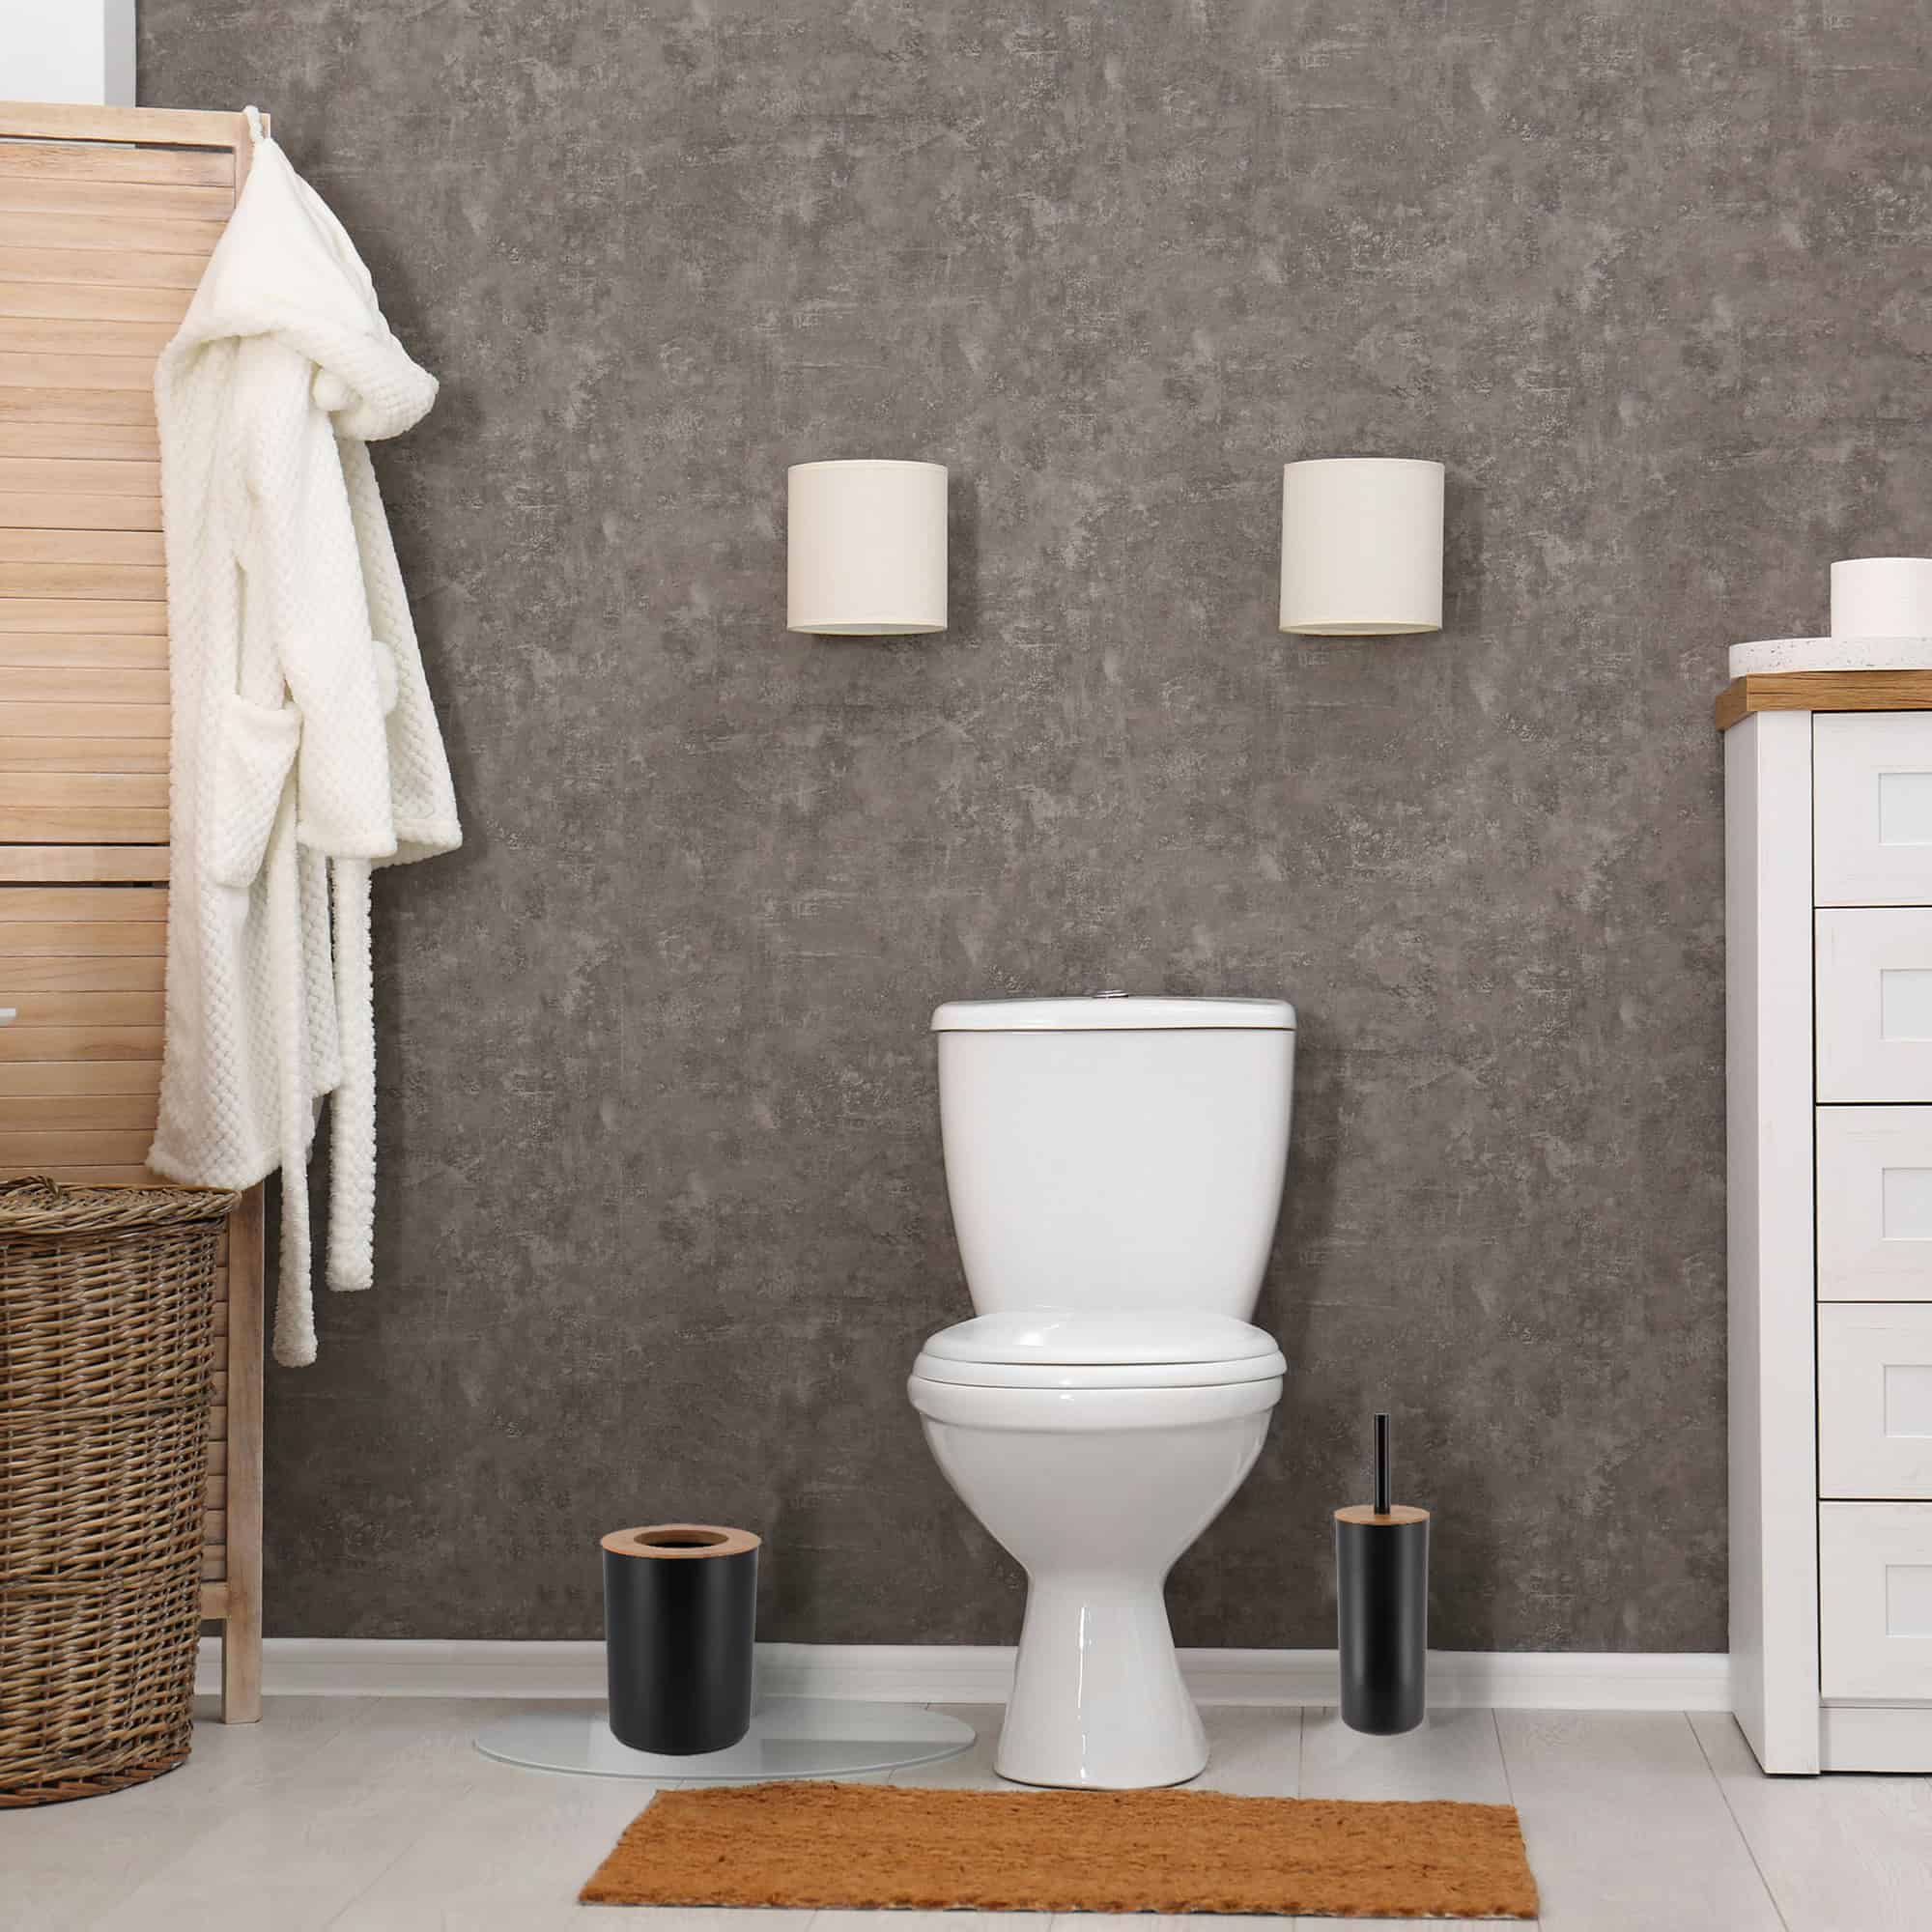 minimalistic toilet brush for modern bathroom